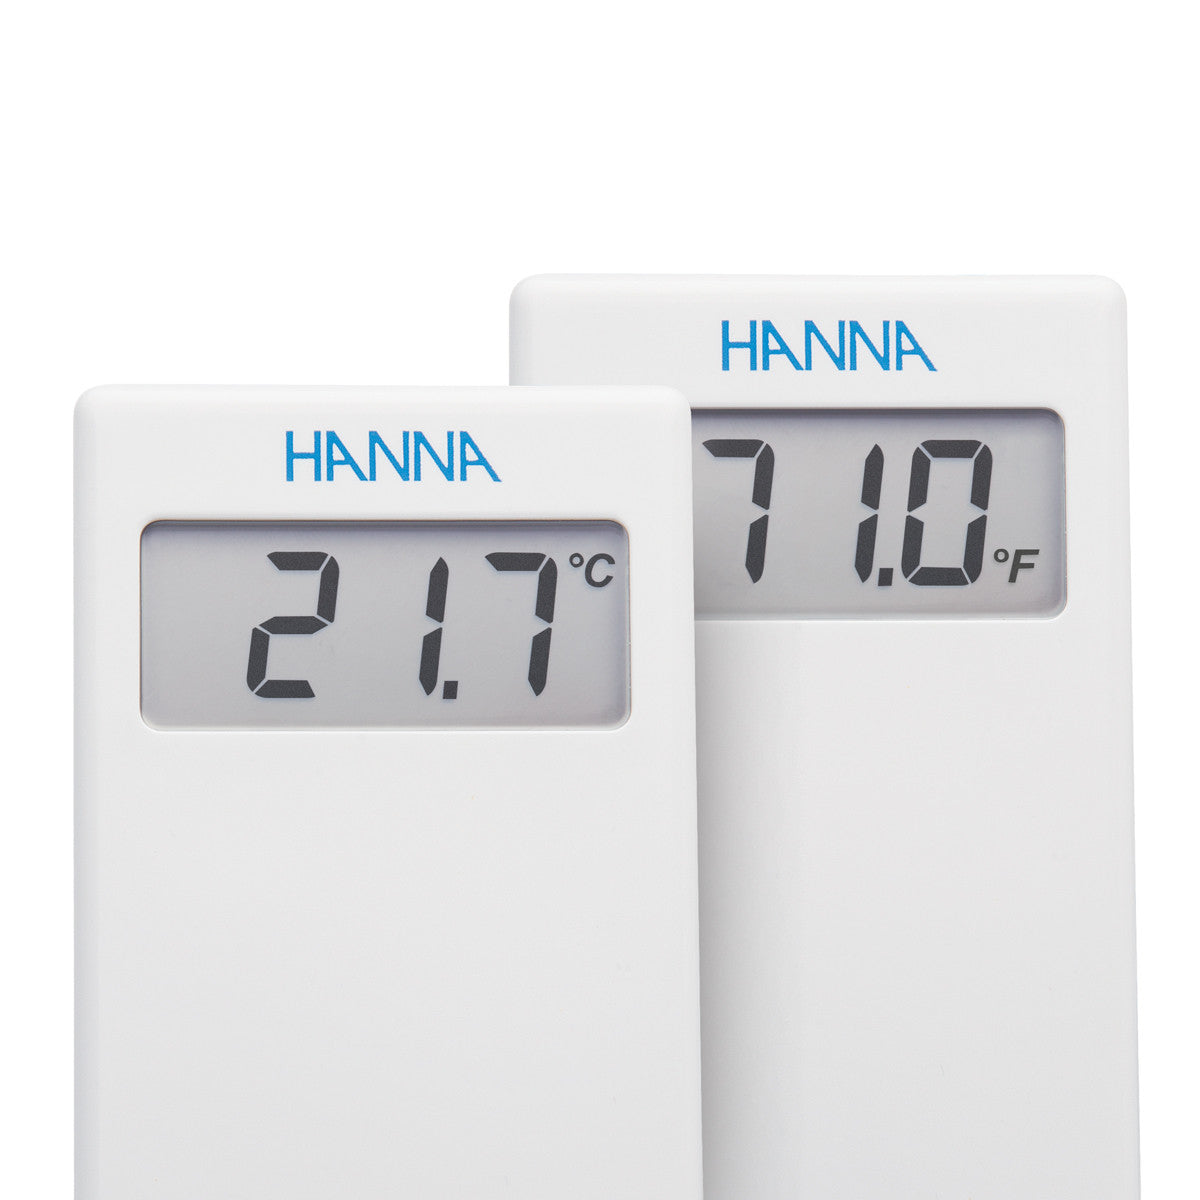 Checktemp 1 Digital Thermometer - Hanna Instruments